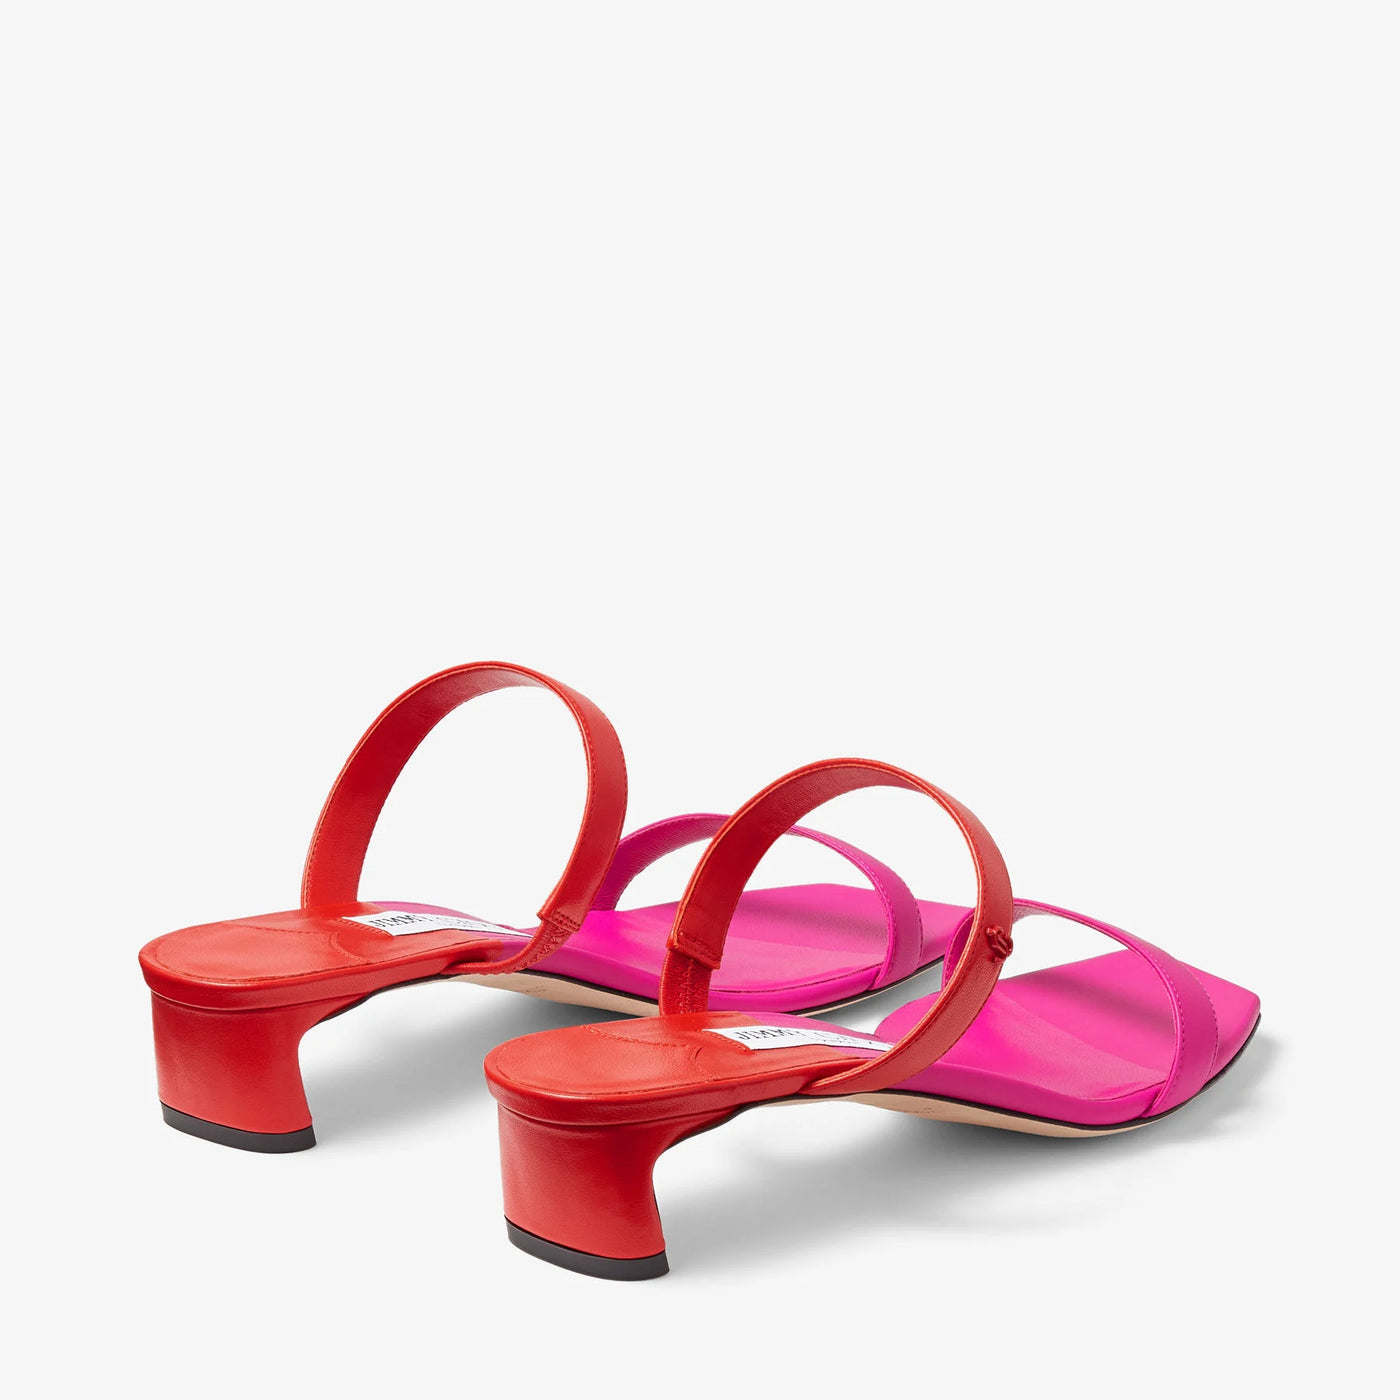 Kyda 35mm Nappa Leather Sandals - Fuchsia/Pink